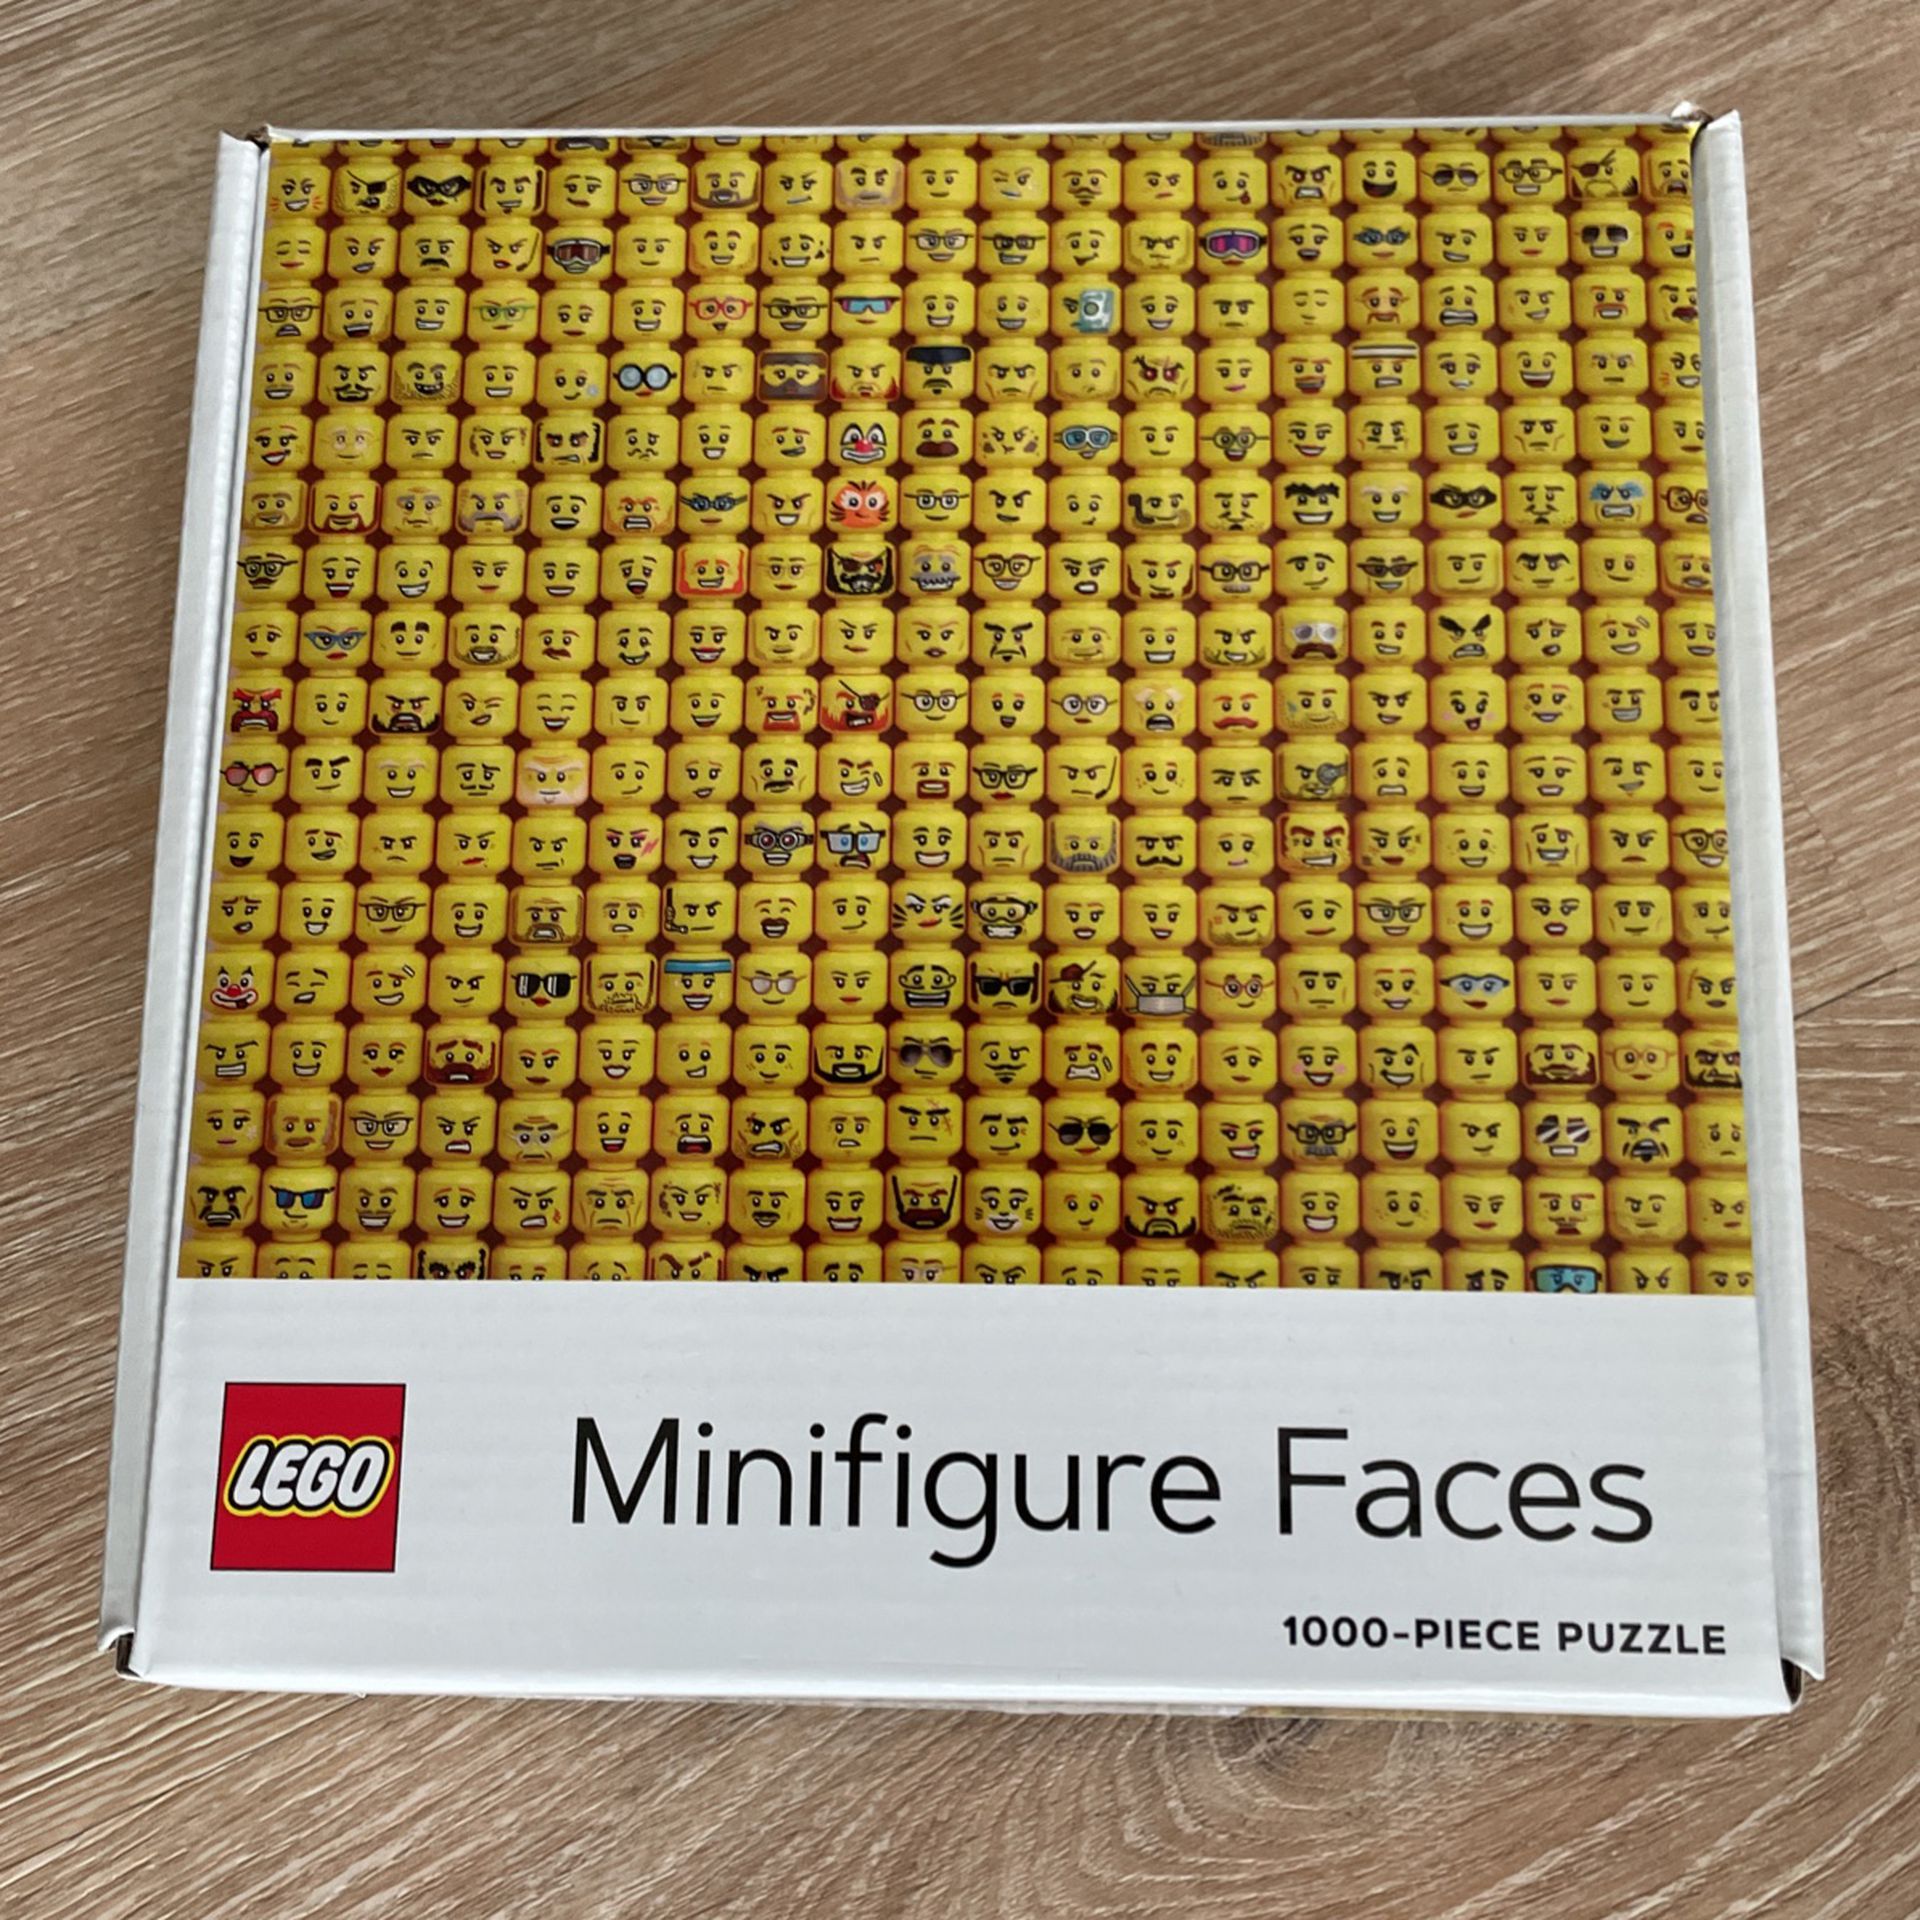  LEGO Minifigure Faces 1000-Piece Jigsaw Puzzle : LEGO